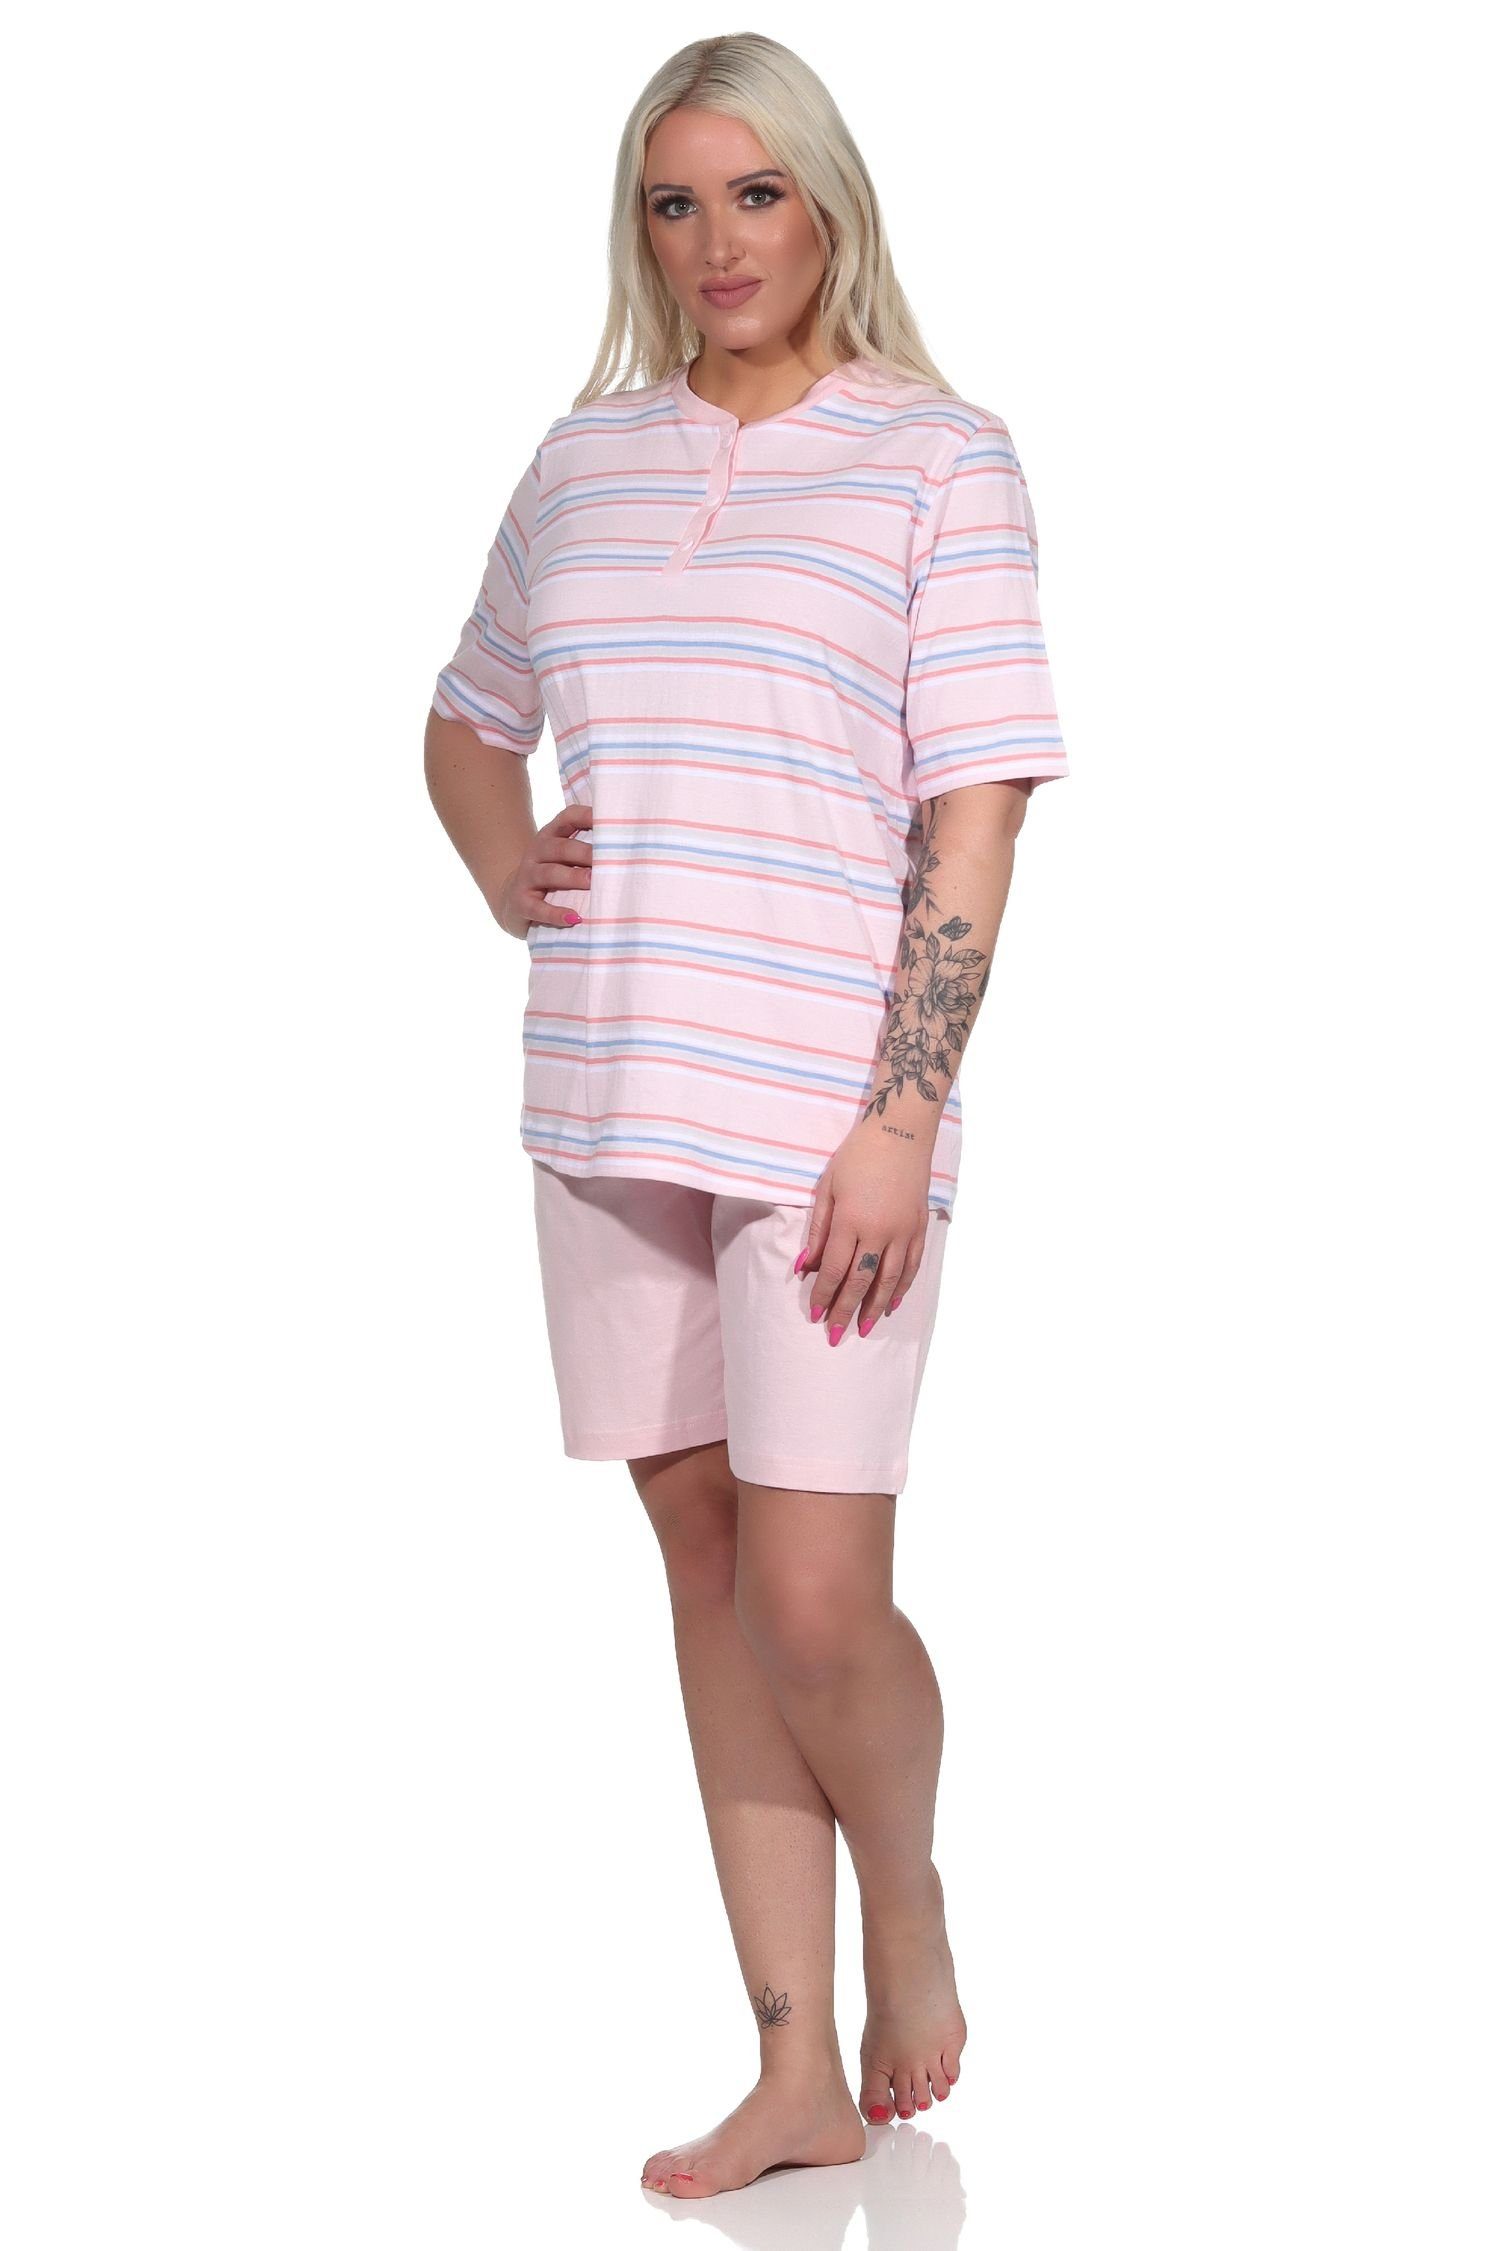 Damen in Shorty kurzarm Streifen pastellfarbenen Pyjama Normann Pyjama Schlafanzug rosa